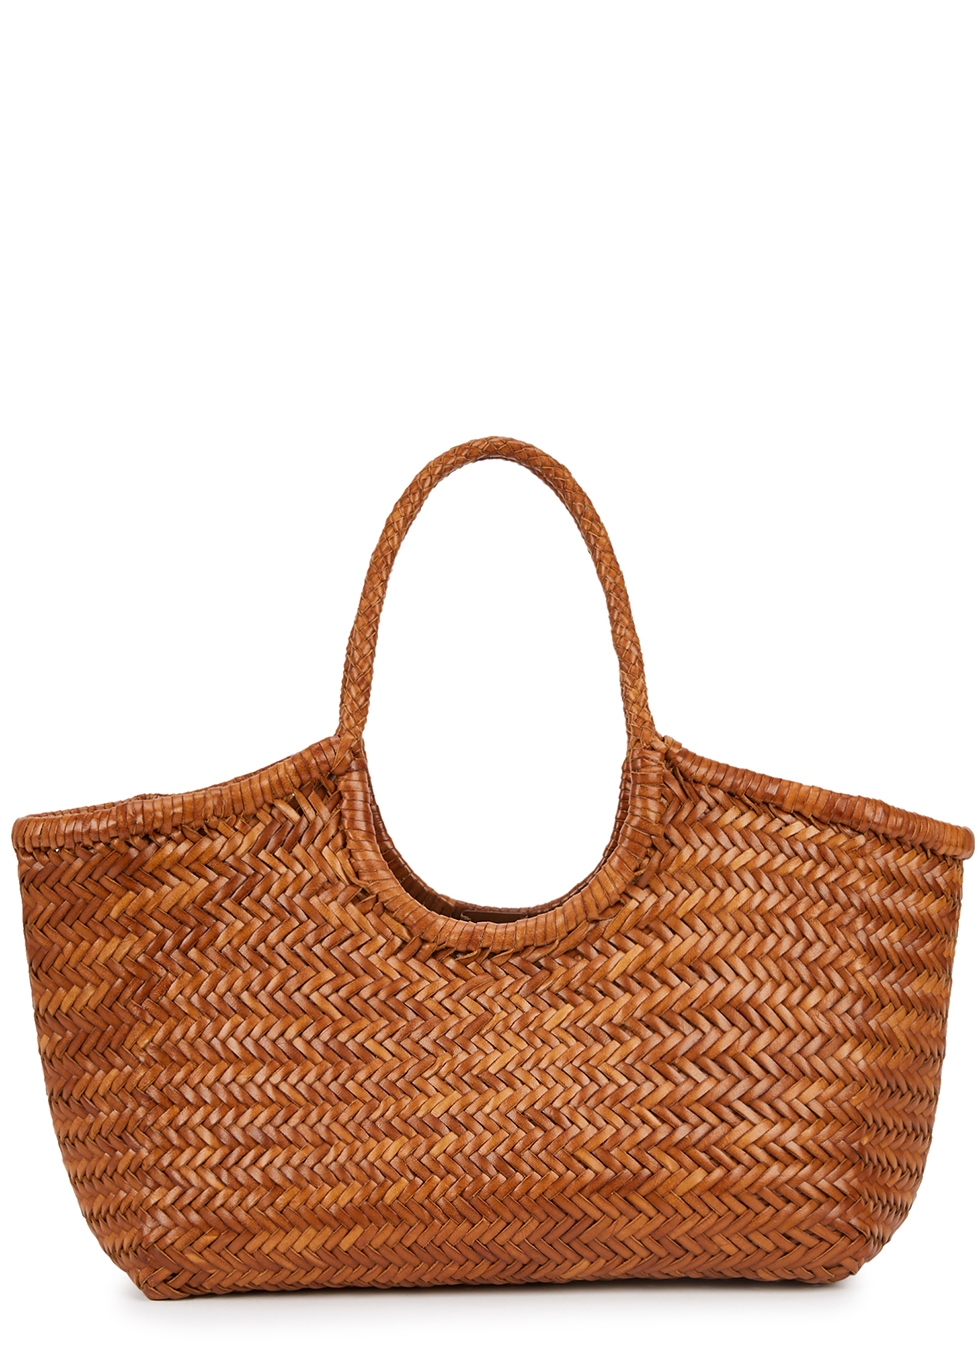 Dragon Diffusion Nantucket brown woven leather basket bag